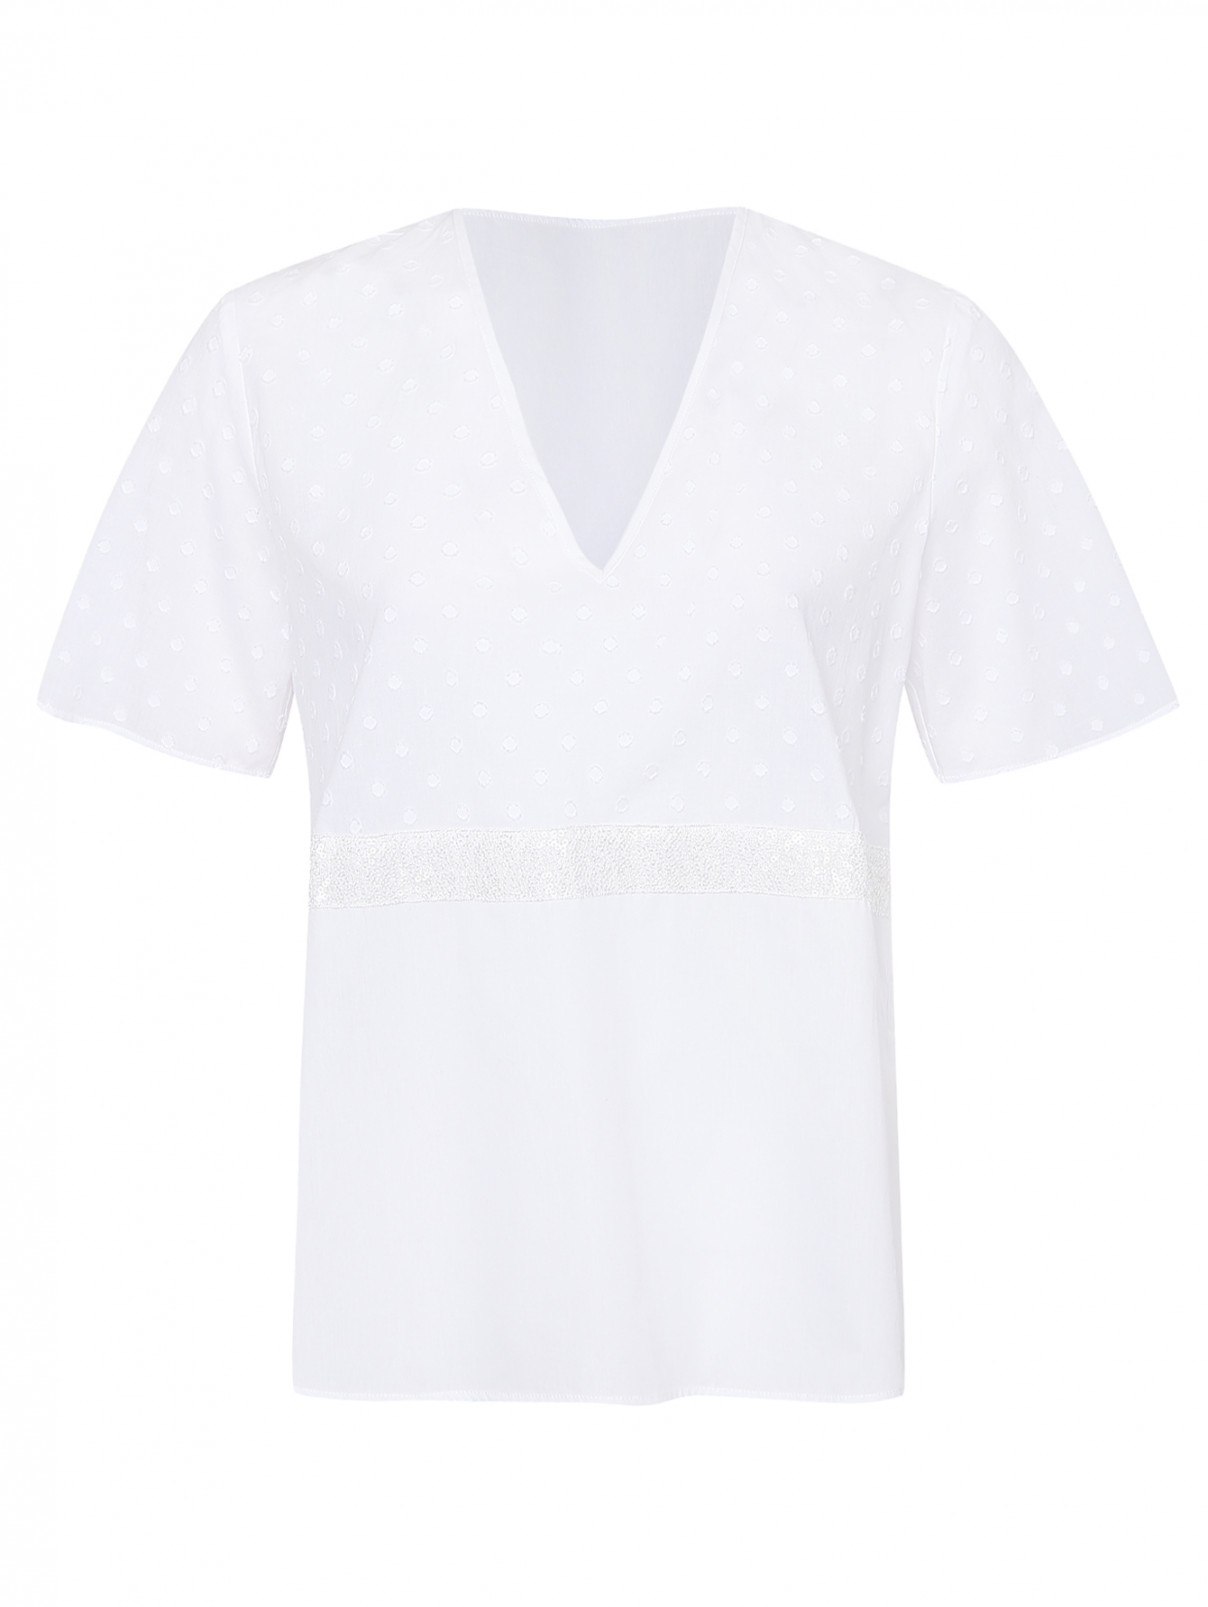 Блуза из хлопка с короткими рукавами Persona by Marina Rinaldi  –  Общий вид  – Цвет:  Белый